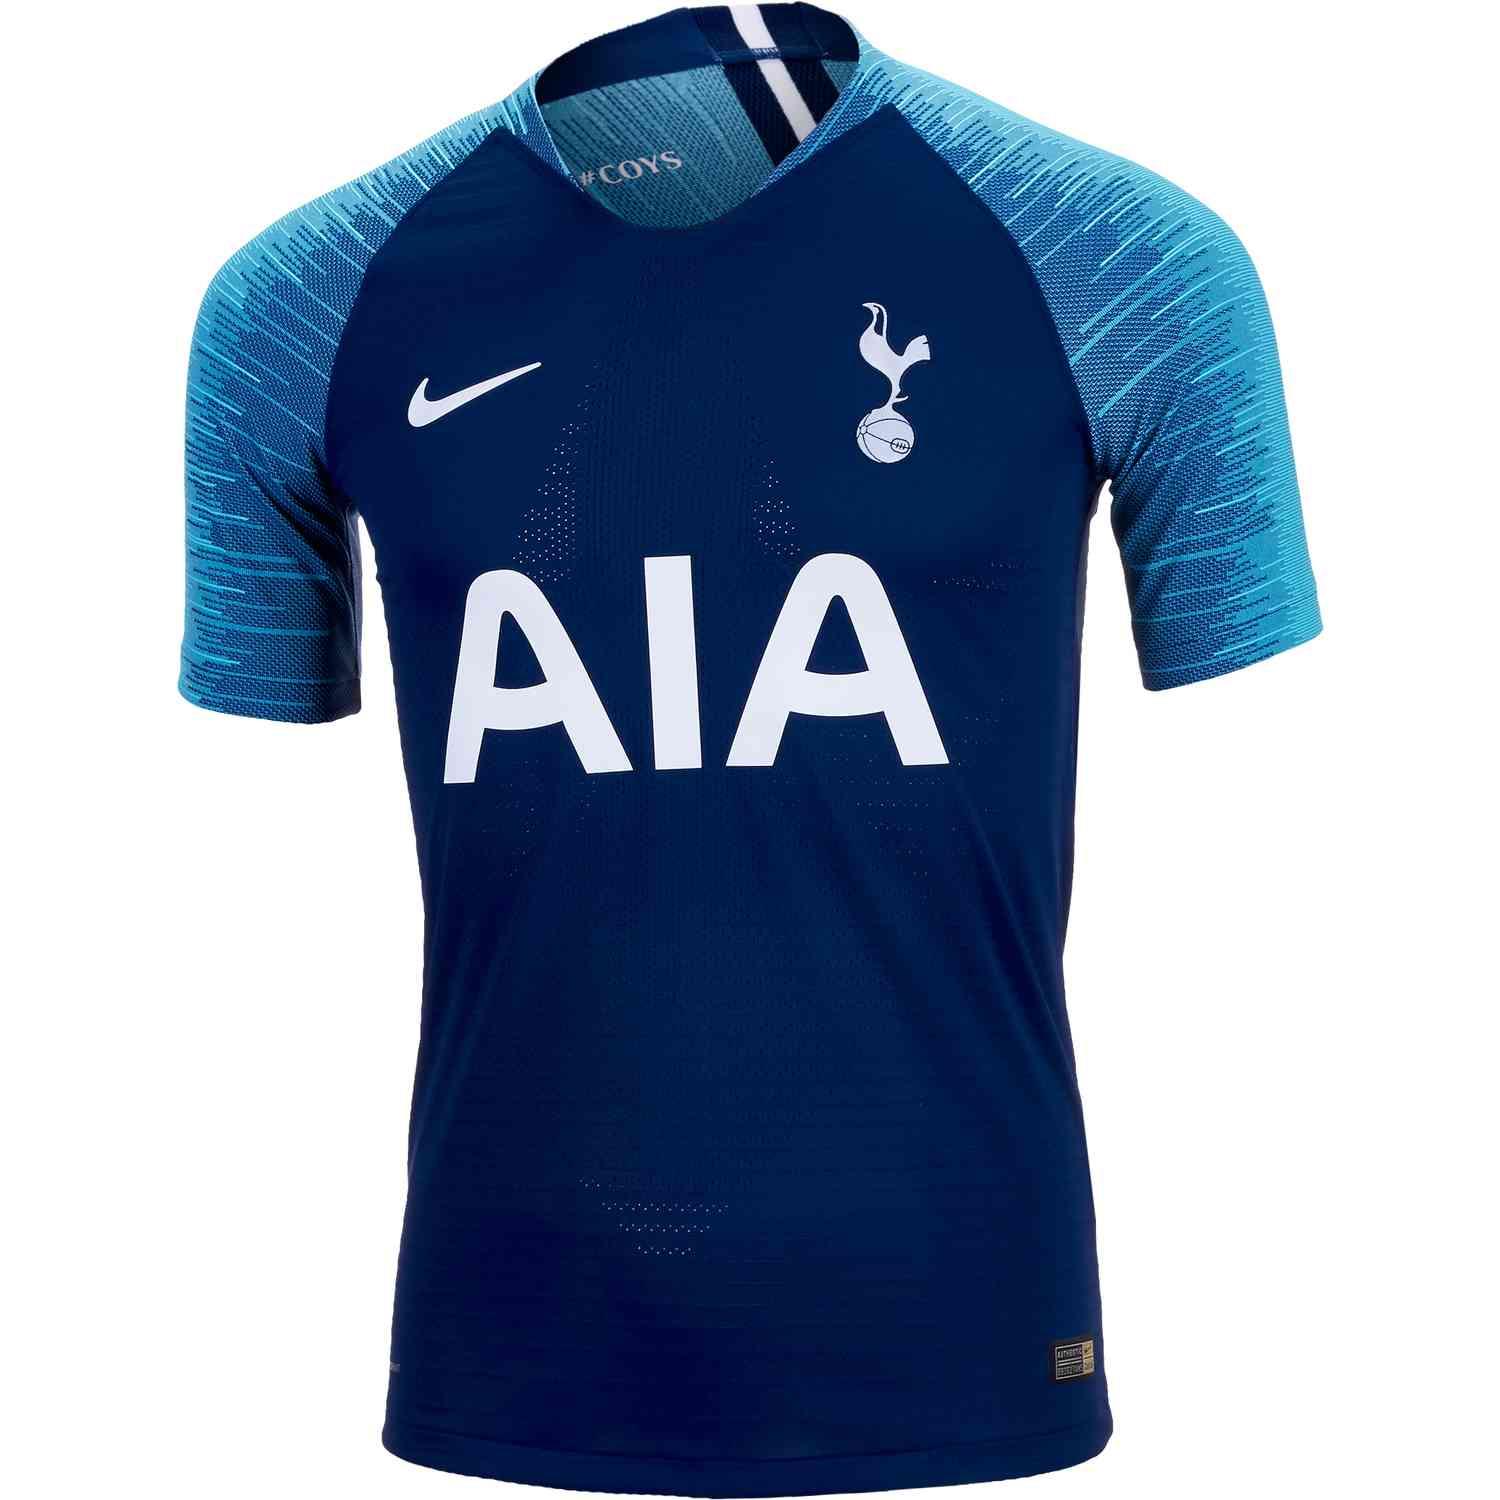 Tottenham Hotspur 2018/19 Nike Home and Away Kits - FOOTBALL FASHION